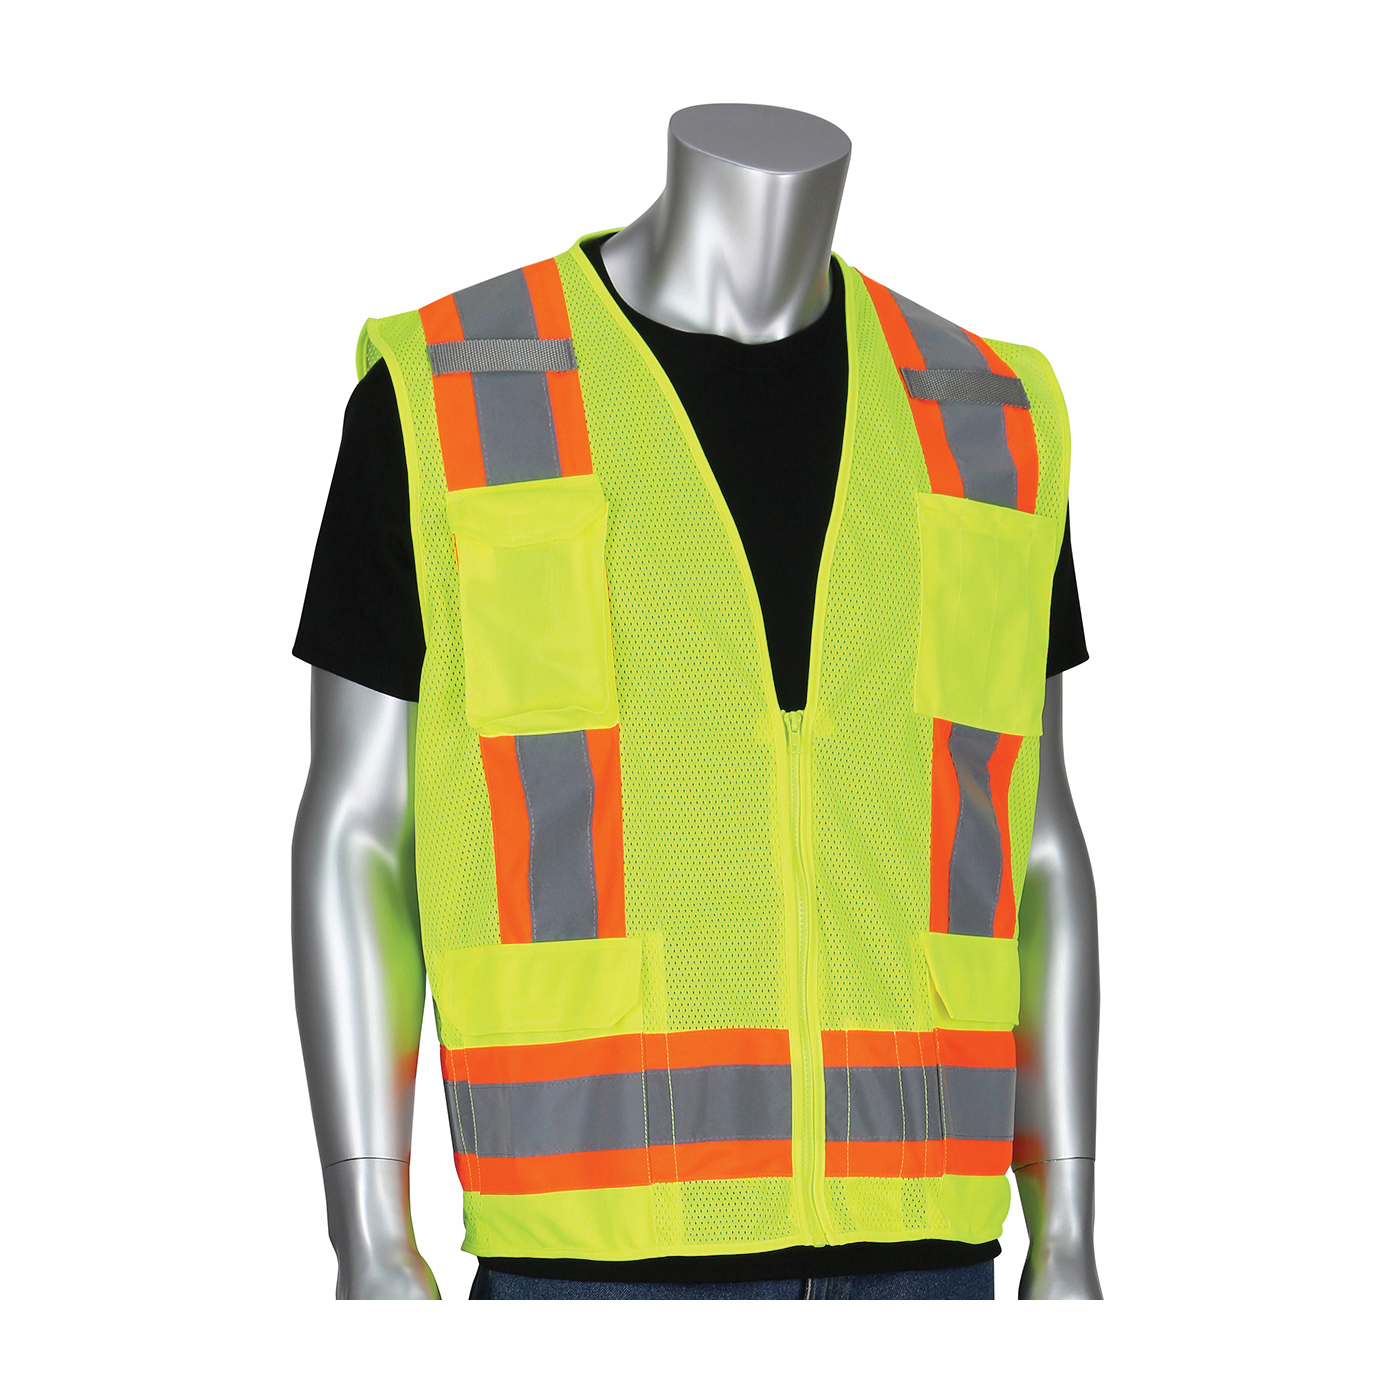 PIP® 302-0500M-LY/M 2-Tone Surveyor Safety Vest, M, Hi-Viz Lime Yellow, Polyester, Zipper Closure, 11 Pockets, ANSI Class: Class 2, Specifications Met: ANSI 107 Type R